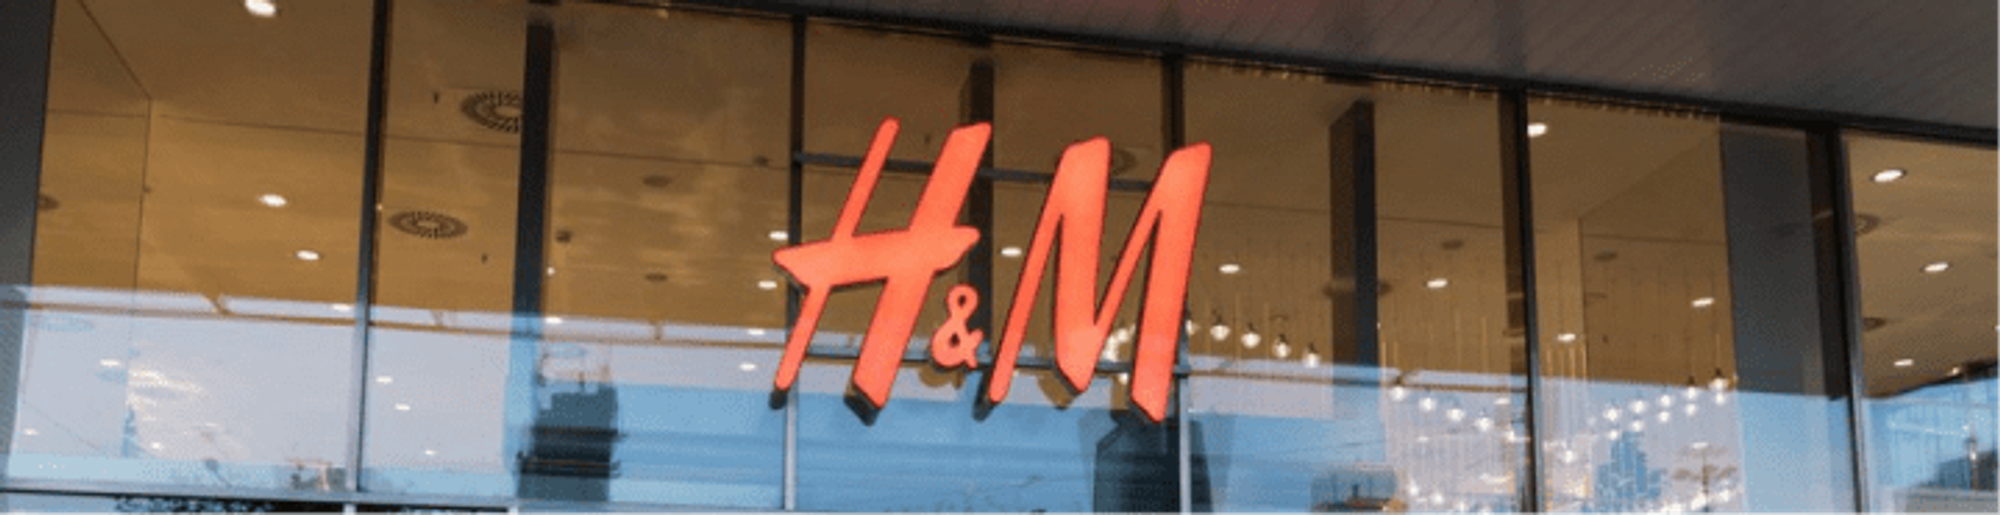 H&M 생일쿠폰 발급 독일